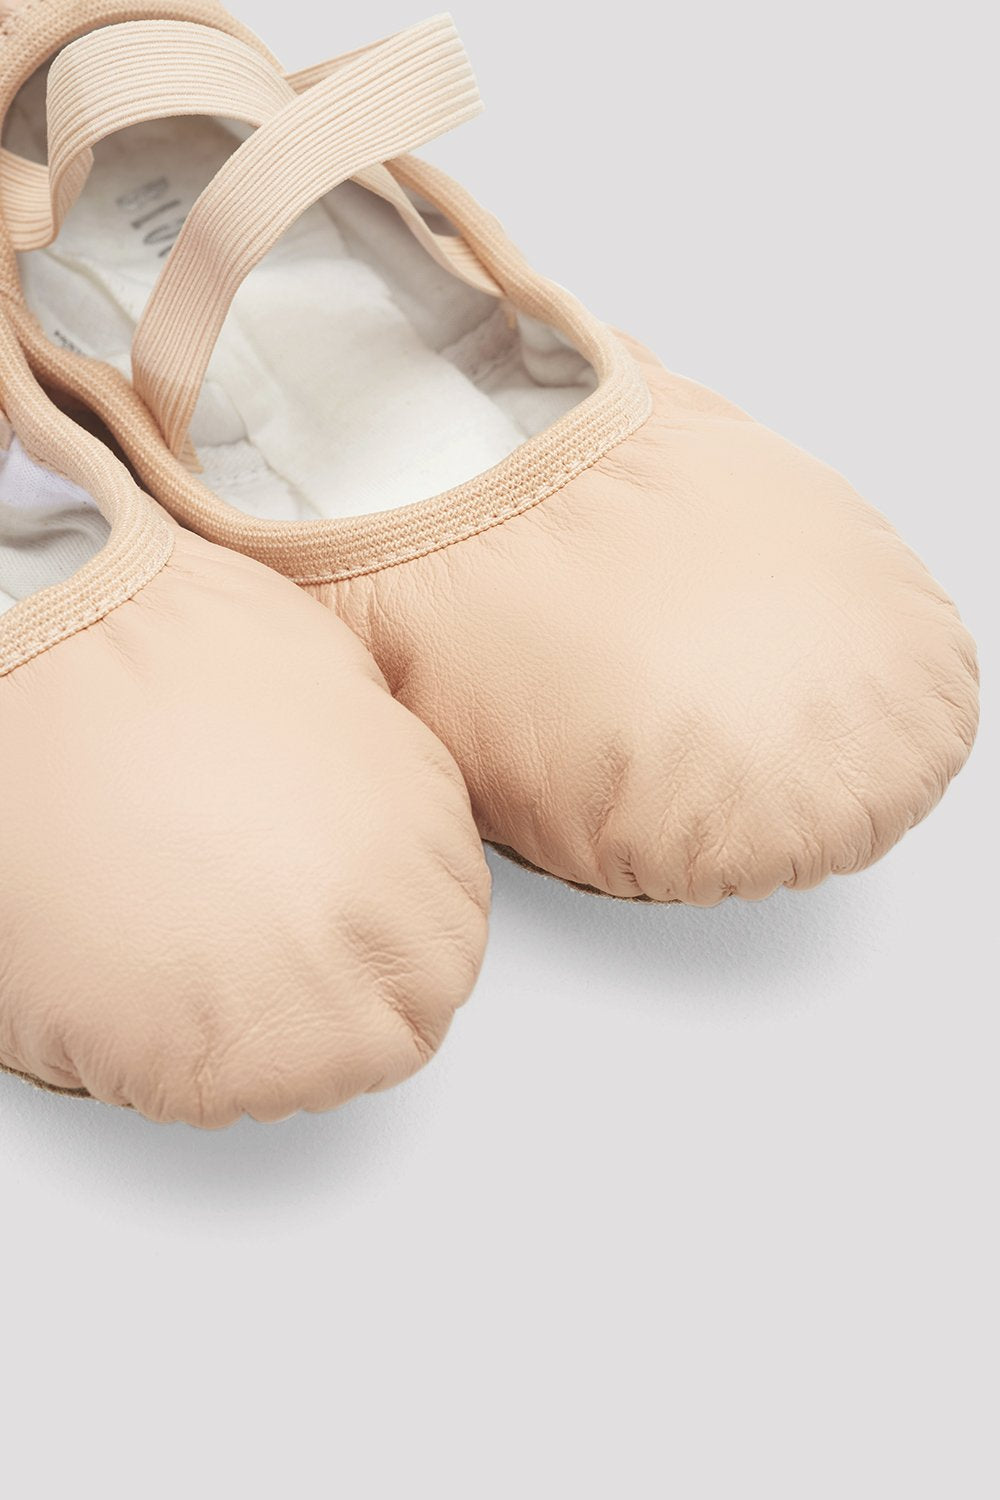 Bloch Adult Odette Leather Split Sole Ballet Shoes